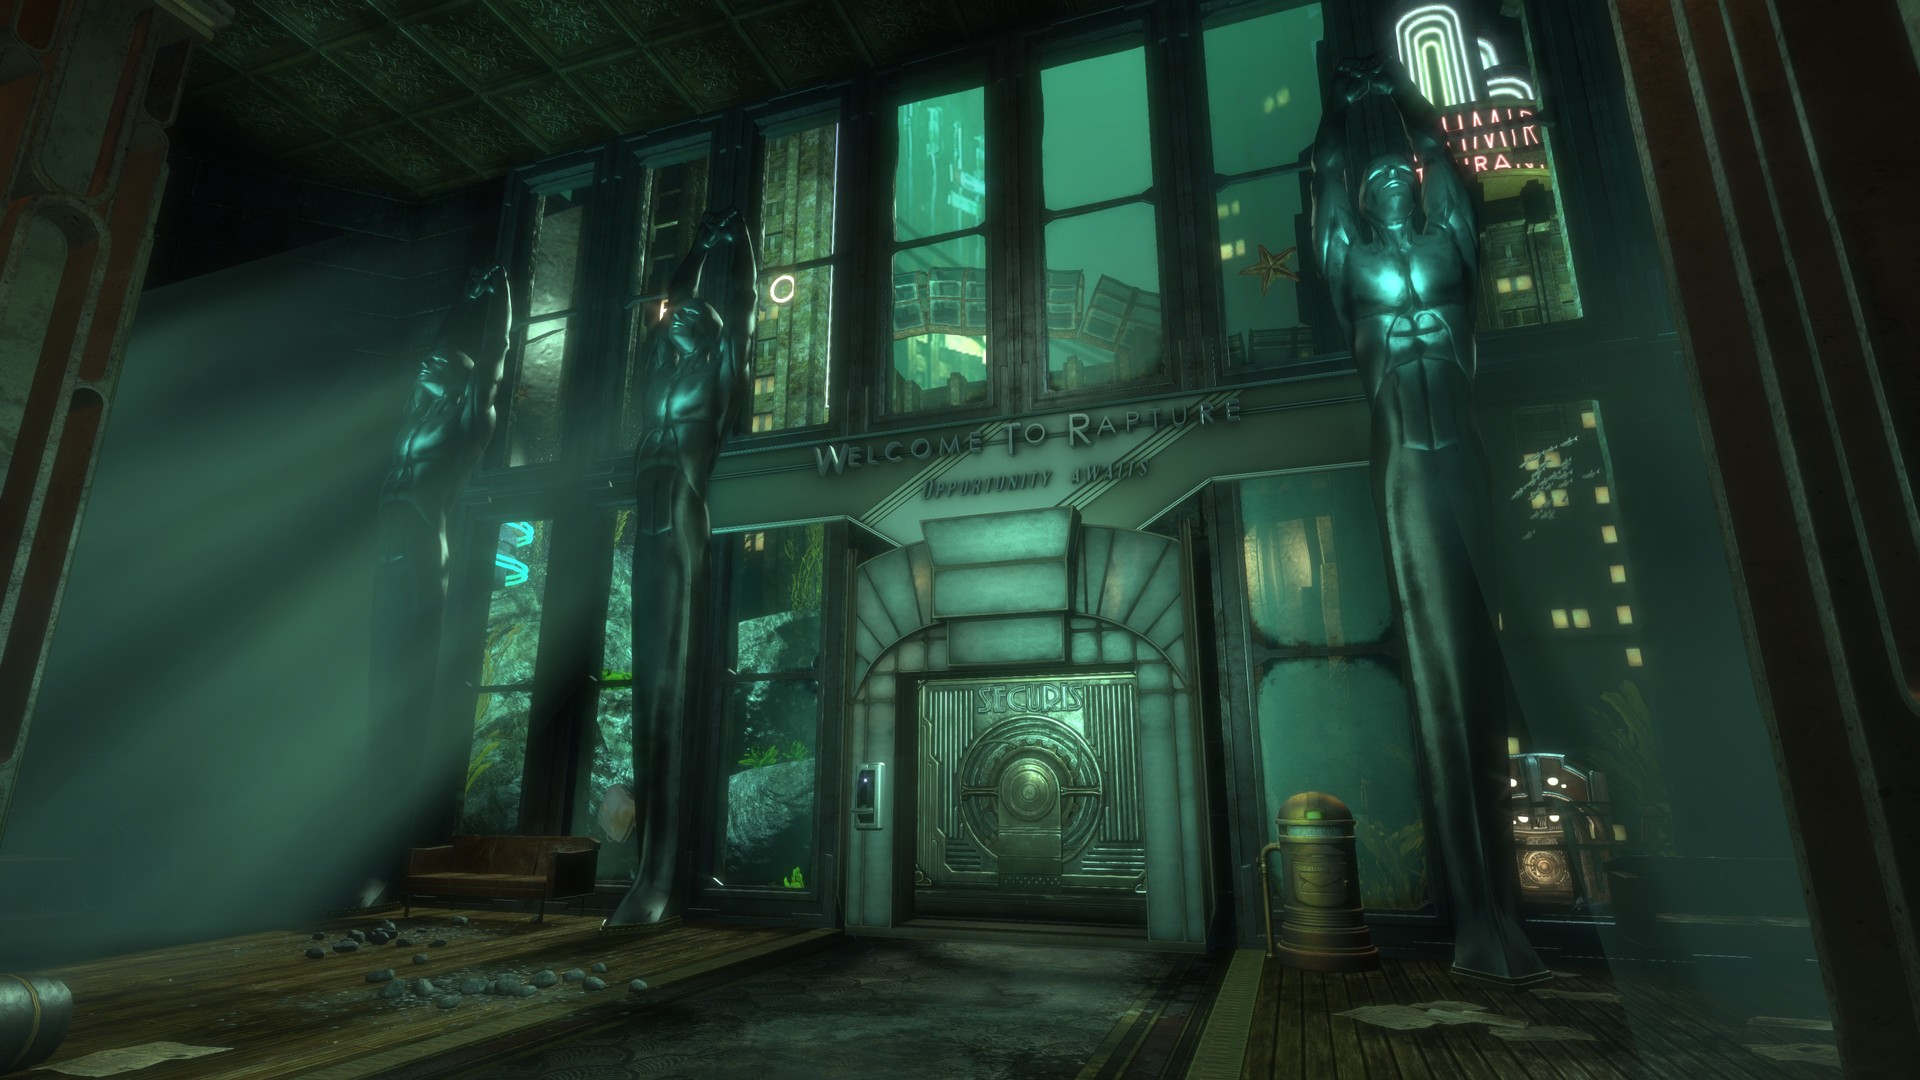 BioShock 1 + 2 Remastered + DLC with a warranty ✅